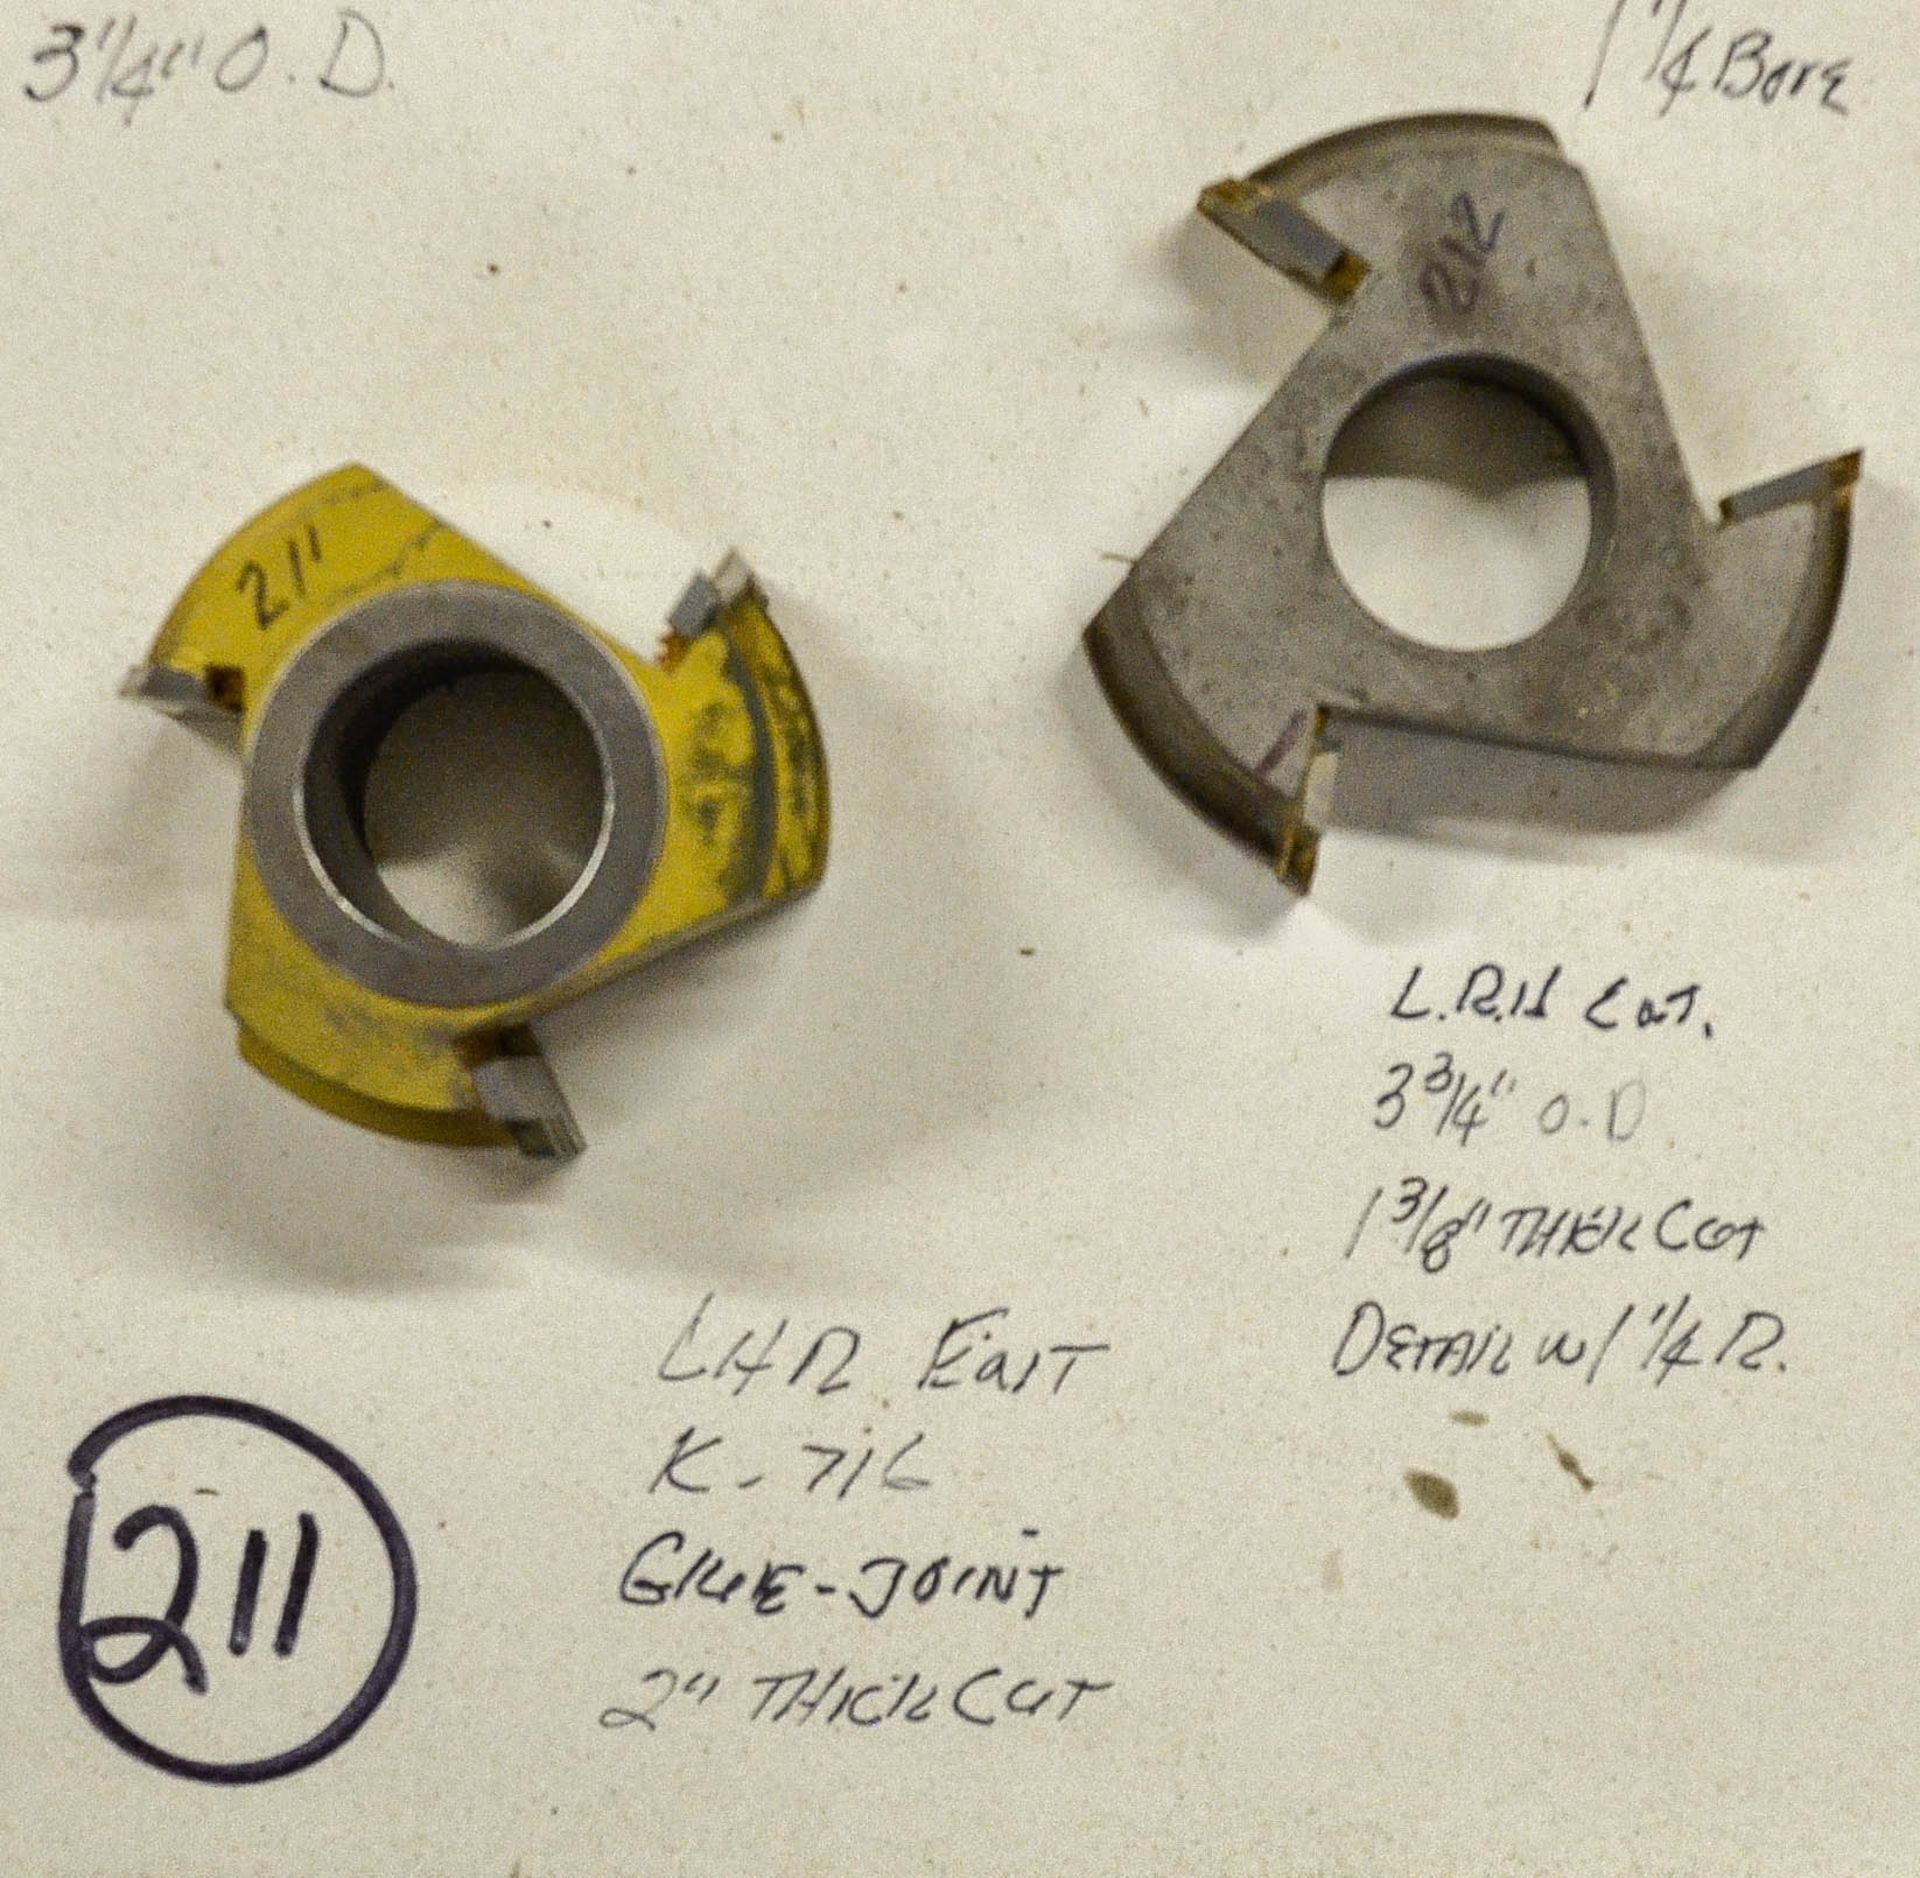 Shaper Cutter, (2) Cutters: (1 ) L.R.H. ENT. K 716 Glue Joint 2" Thick Cut, 3-1/4" Outside Diam